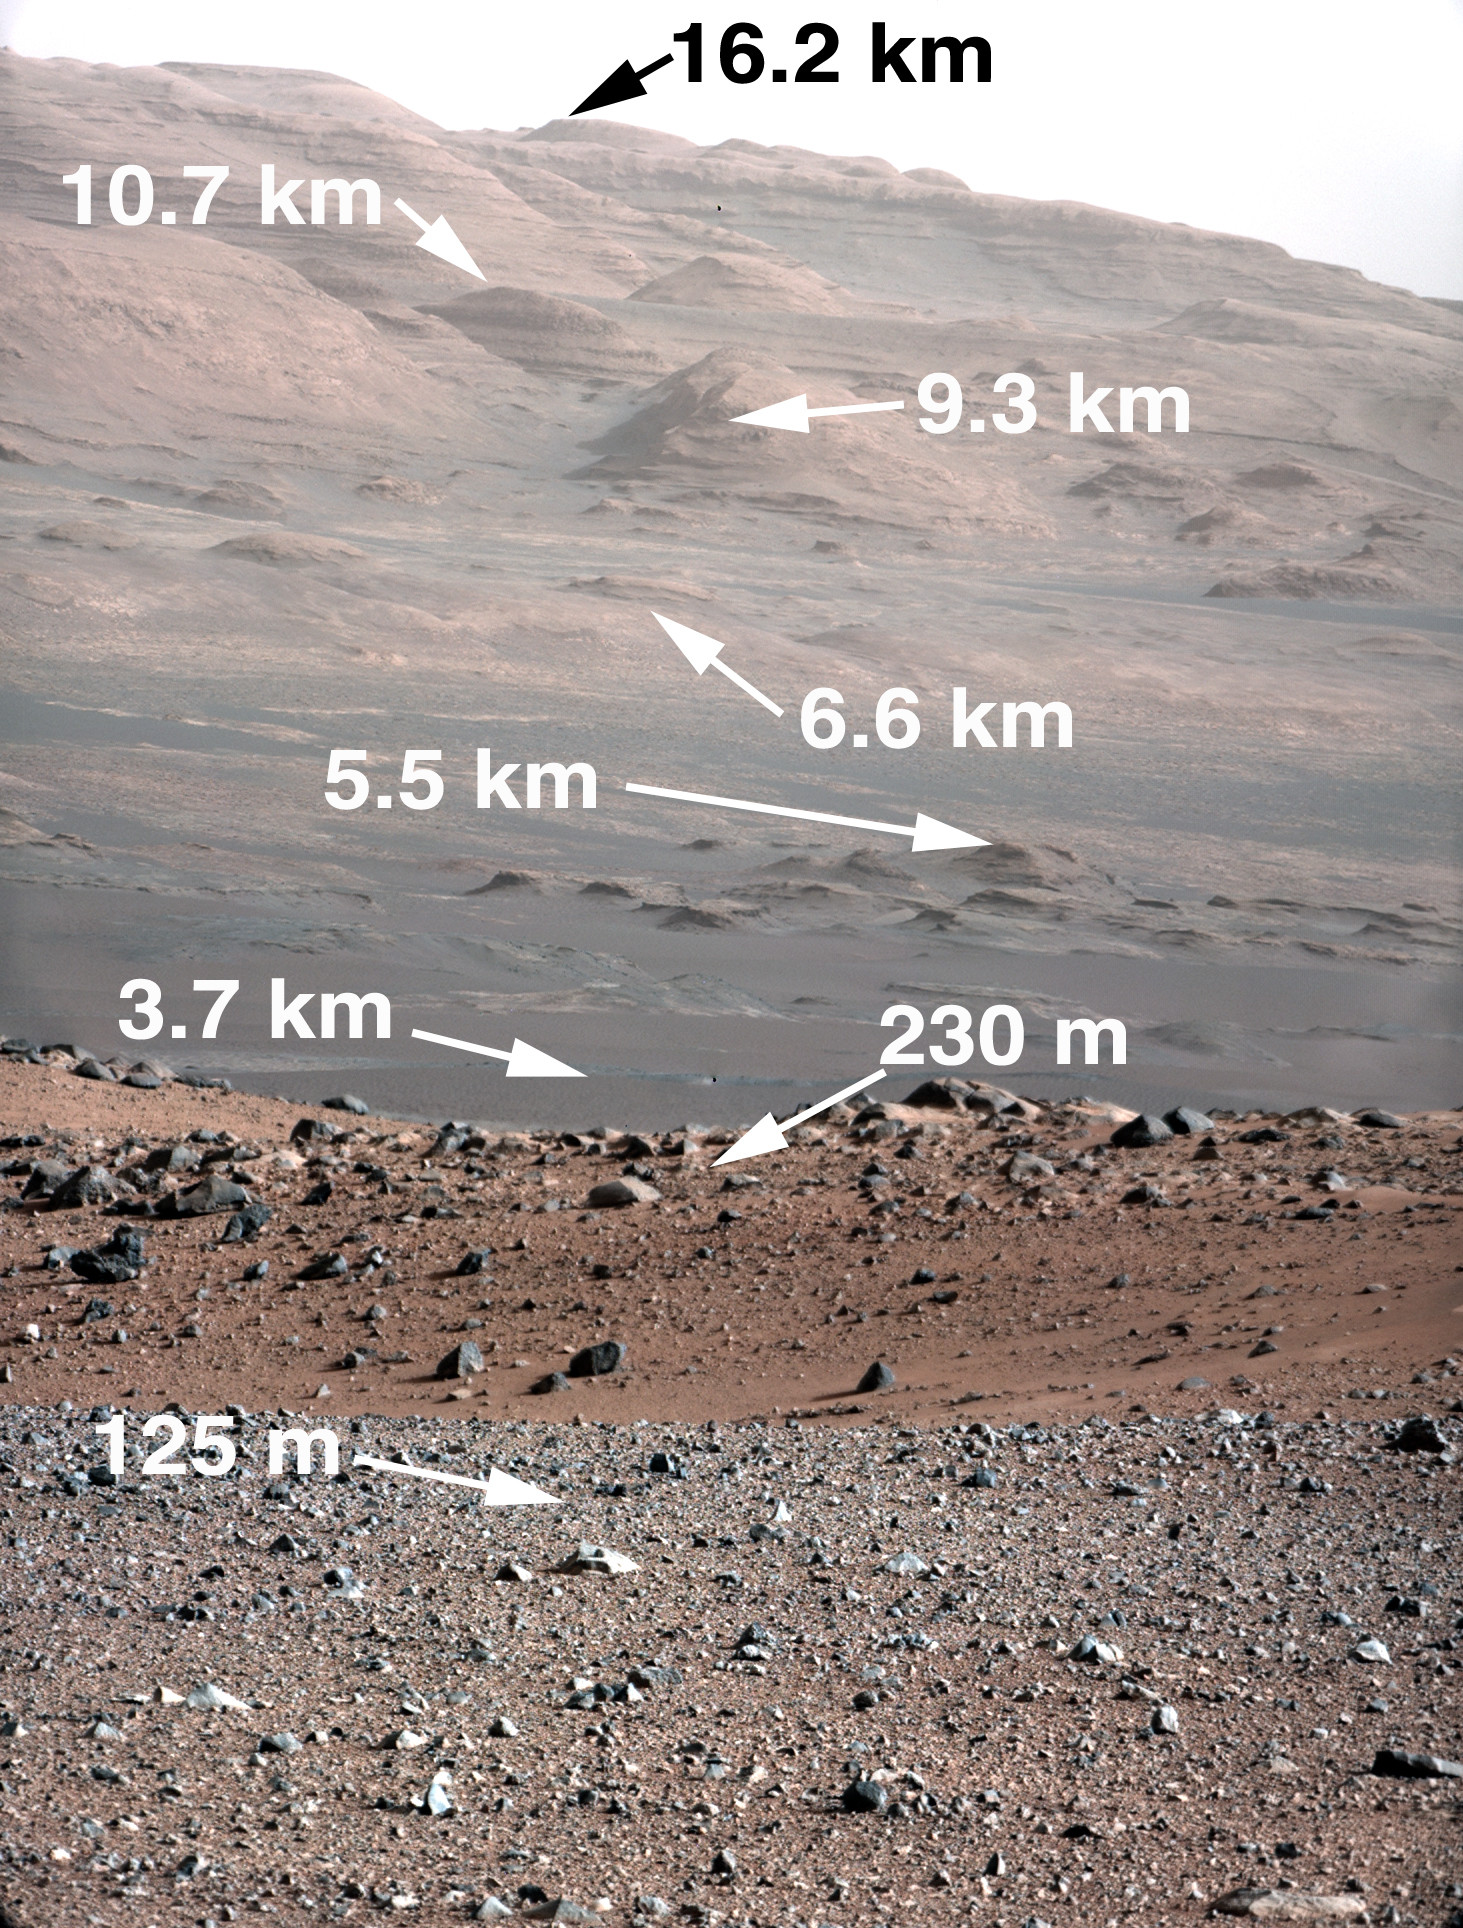 1463x1928 Desktop Wallpaper: Mars as seen by Curiosity